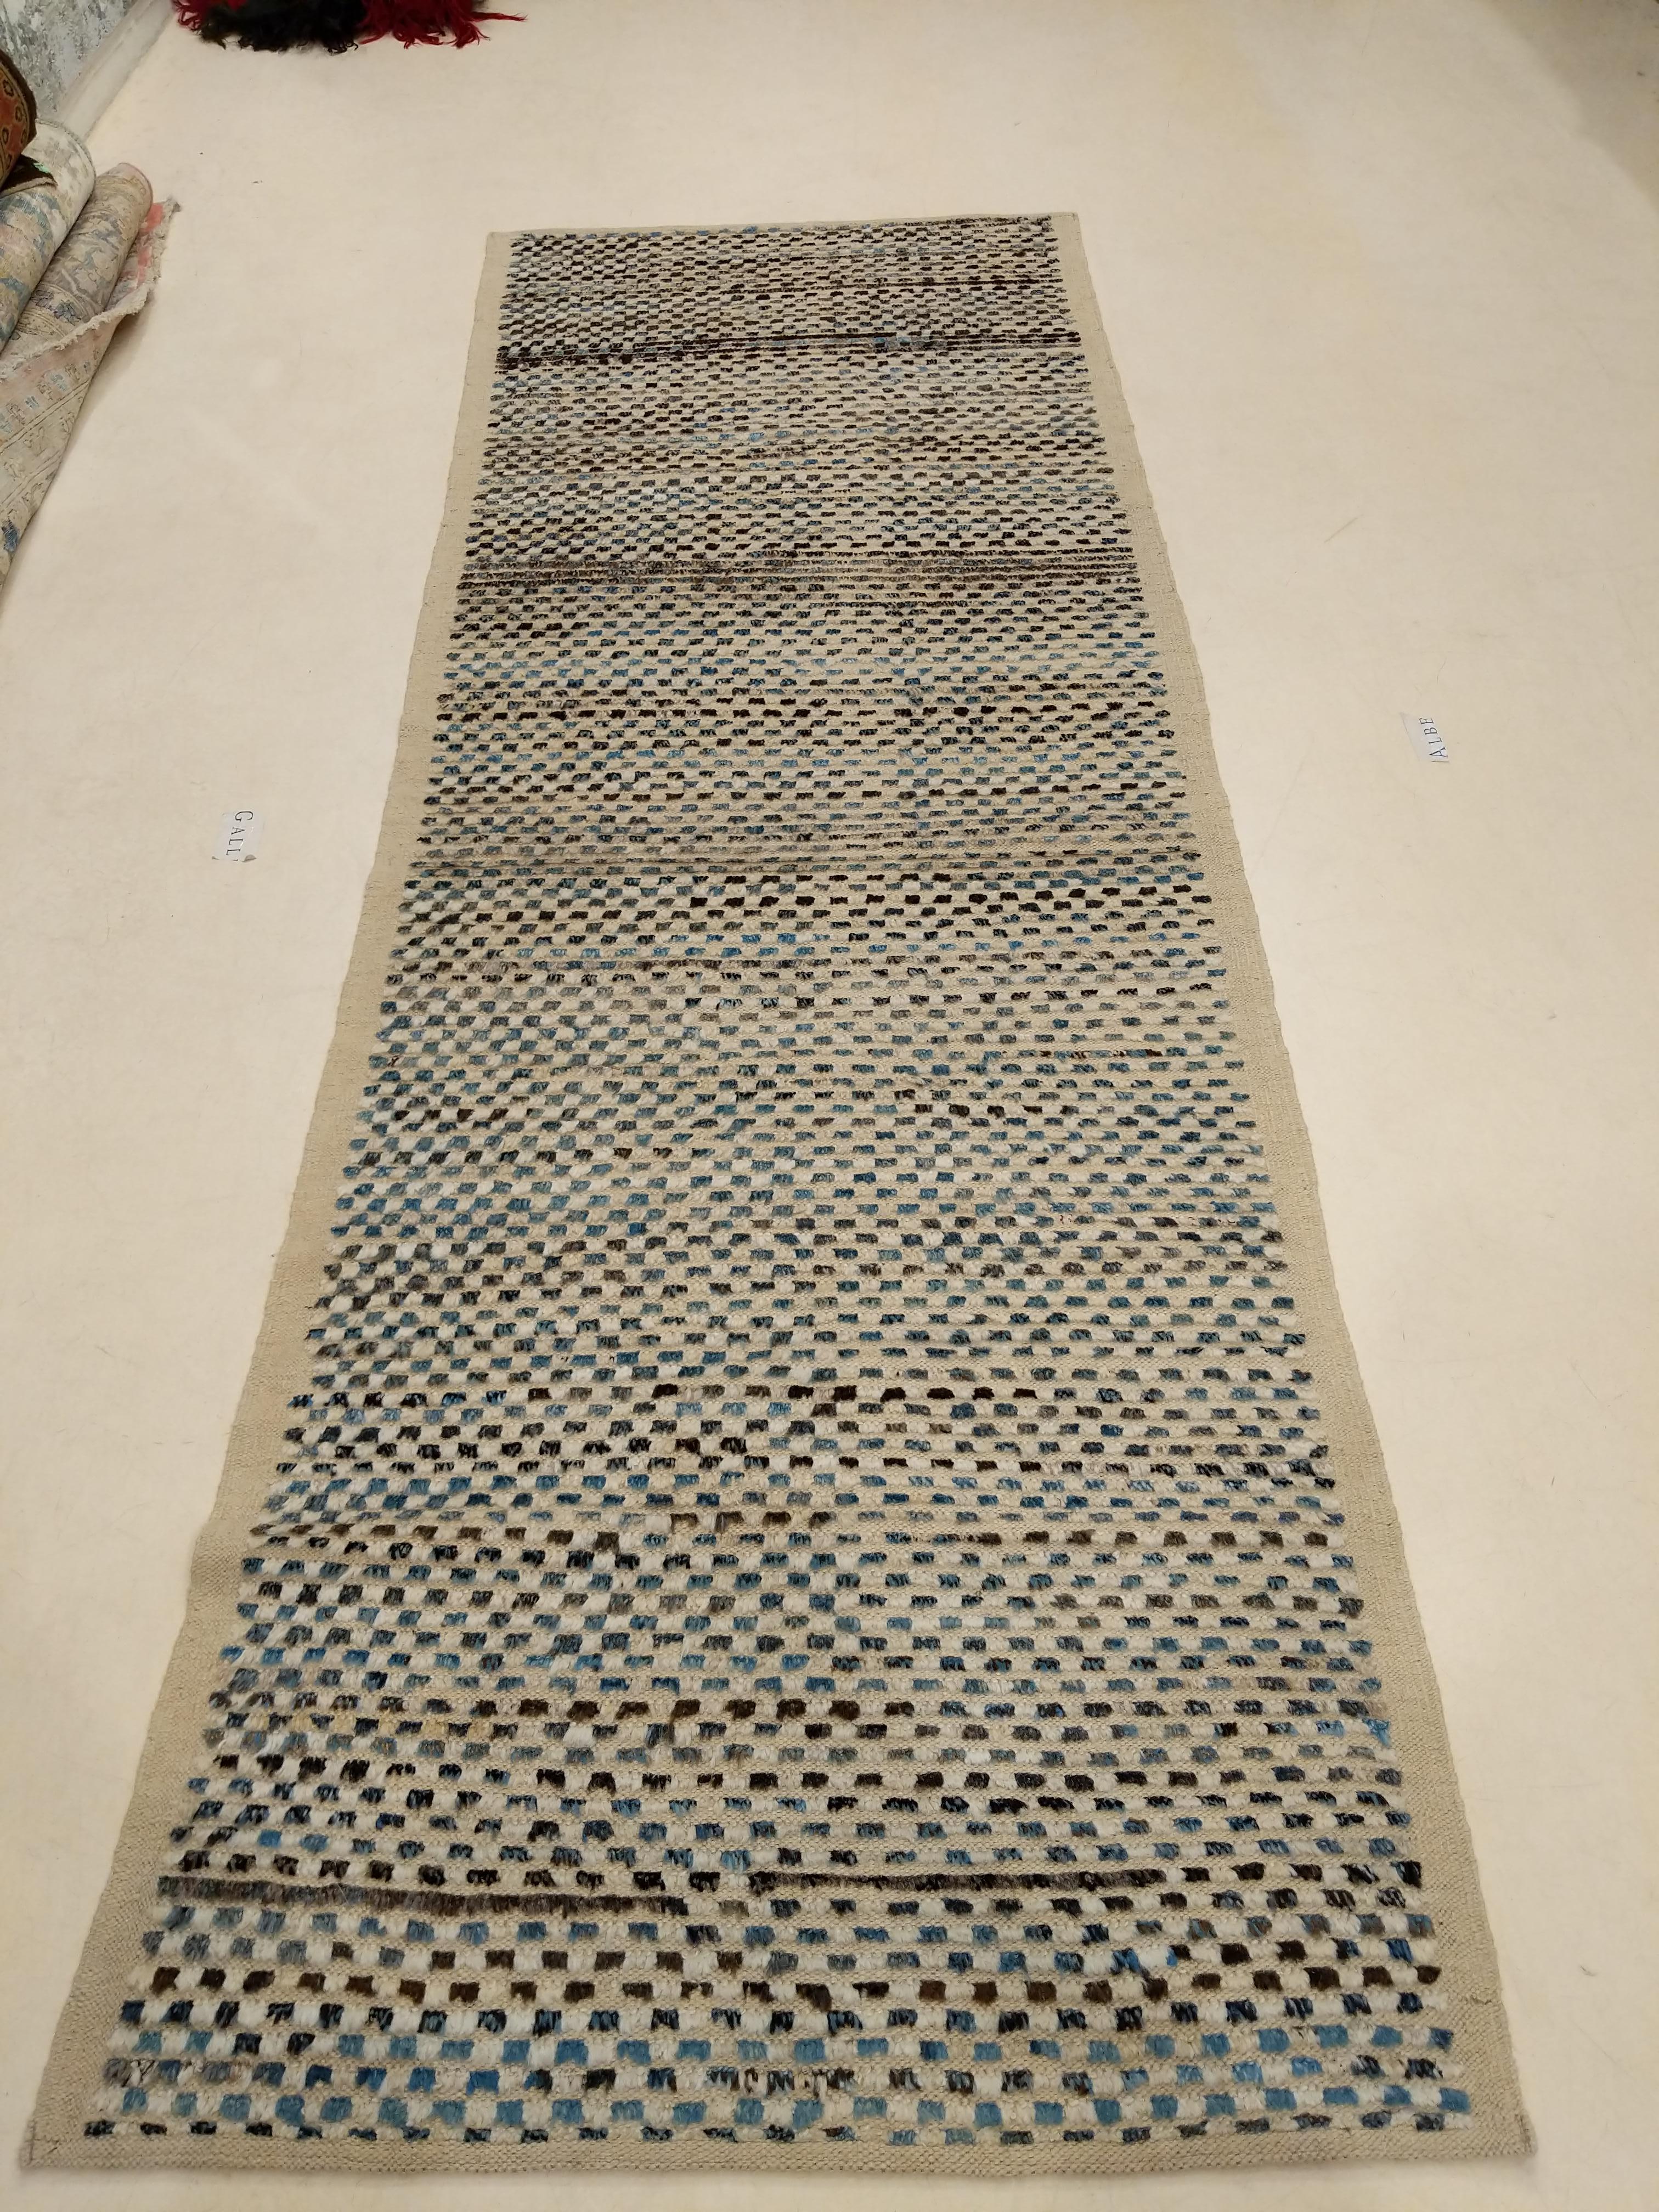 Modernist Design Textured Ivory and Blue Runner Rug in Scandinavian/Berber Style 2